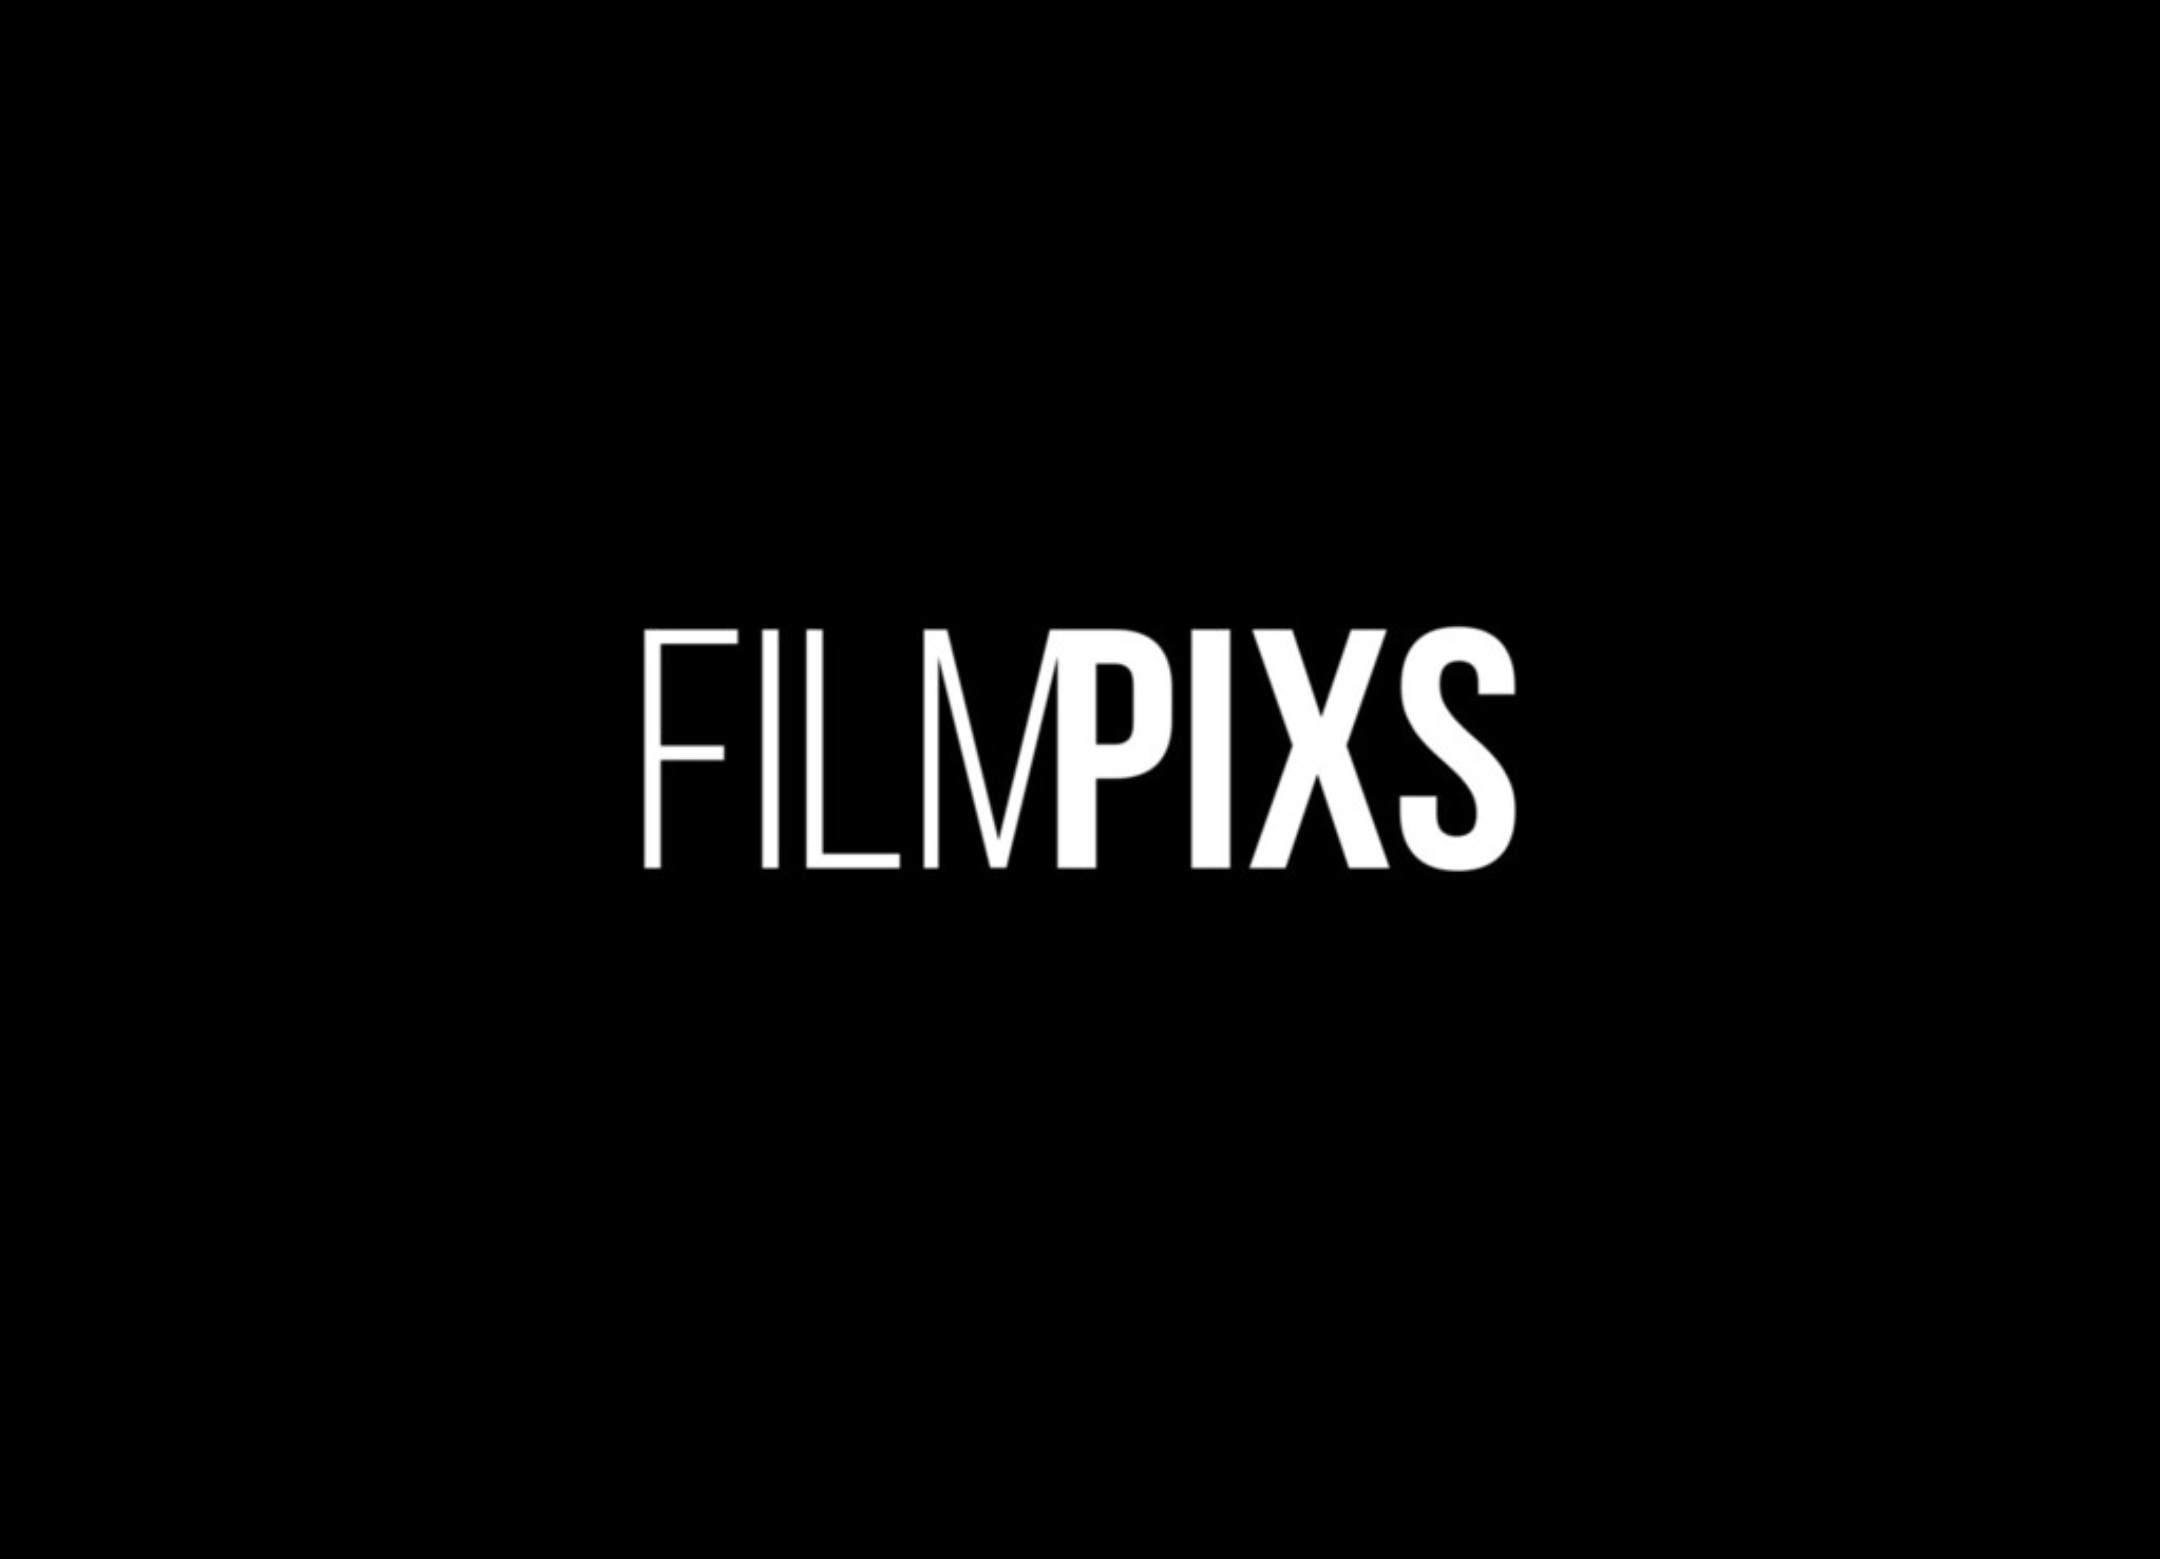 Filmpixs